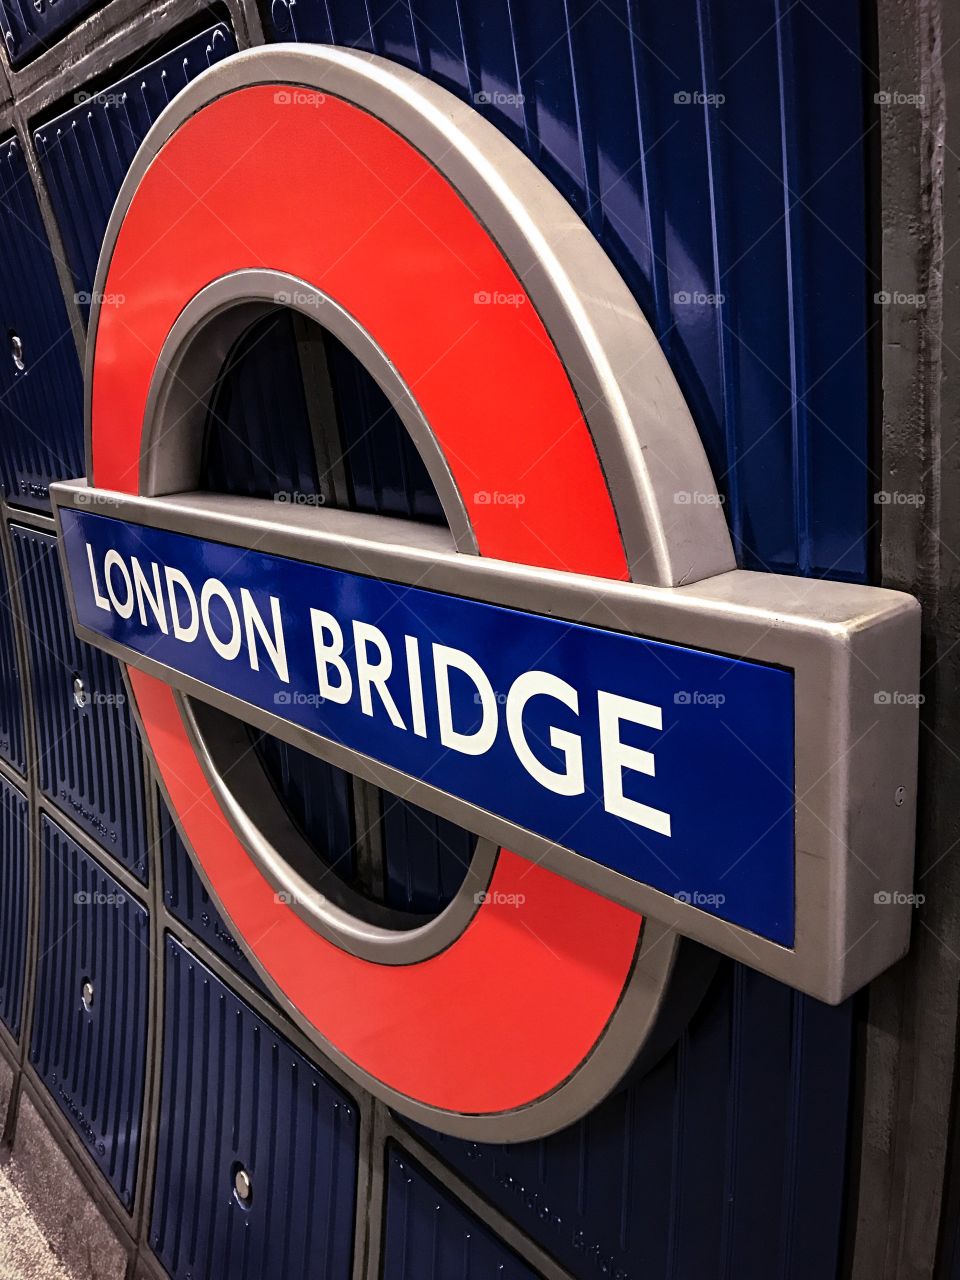 London Bridge station 